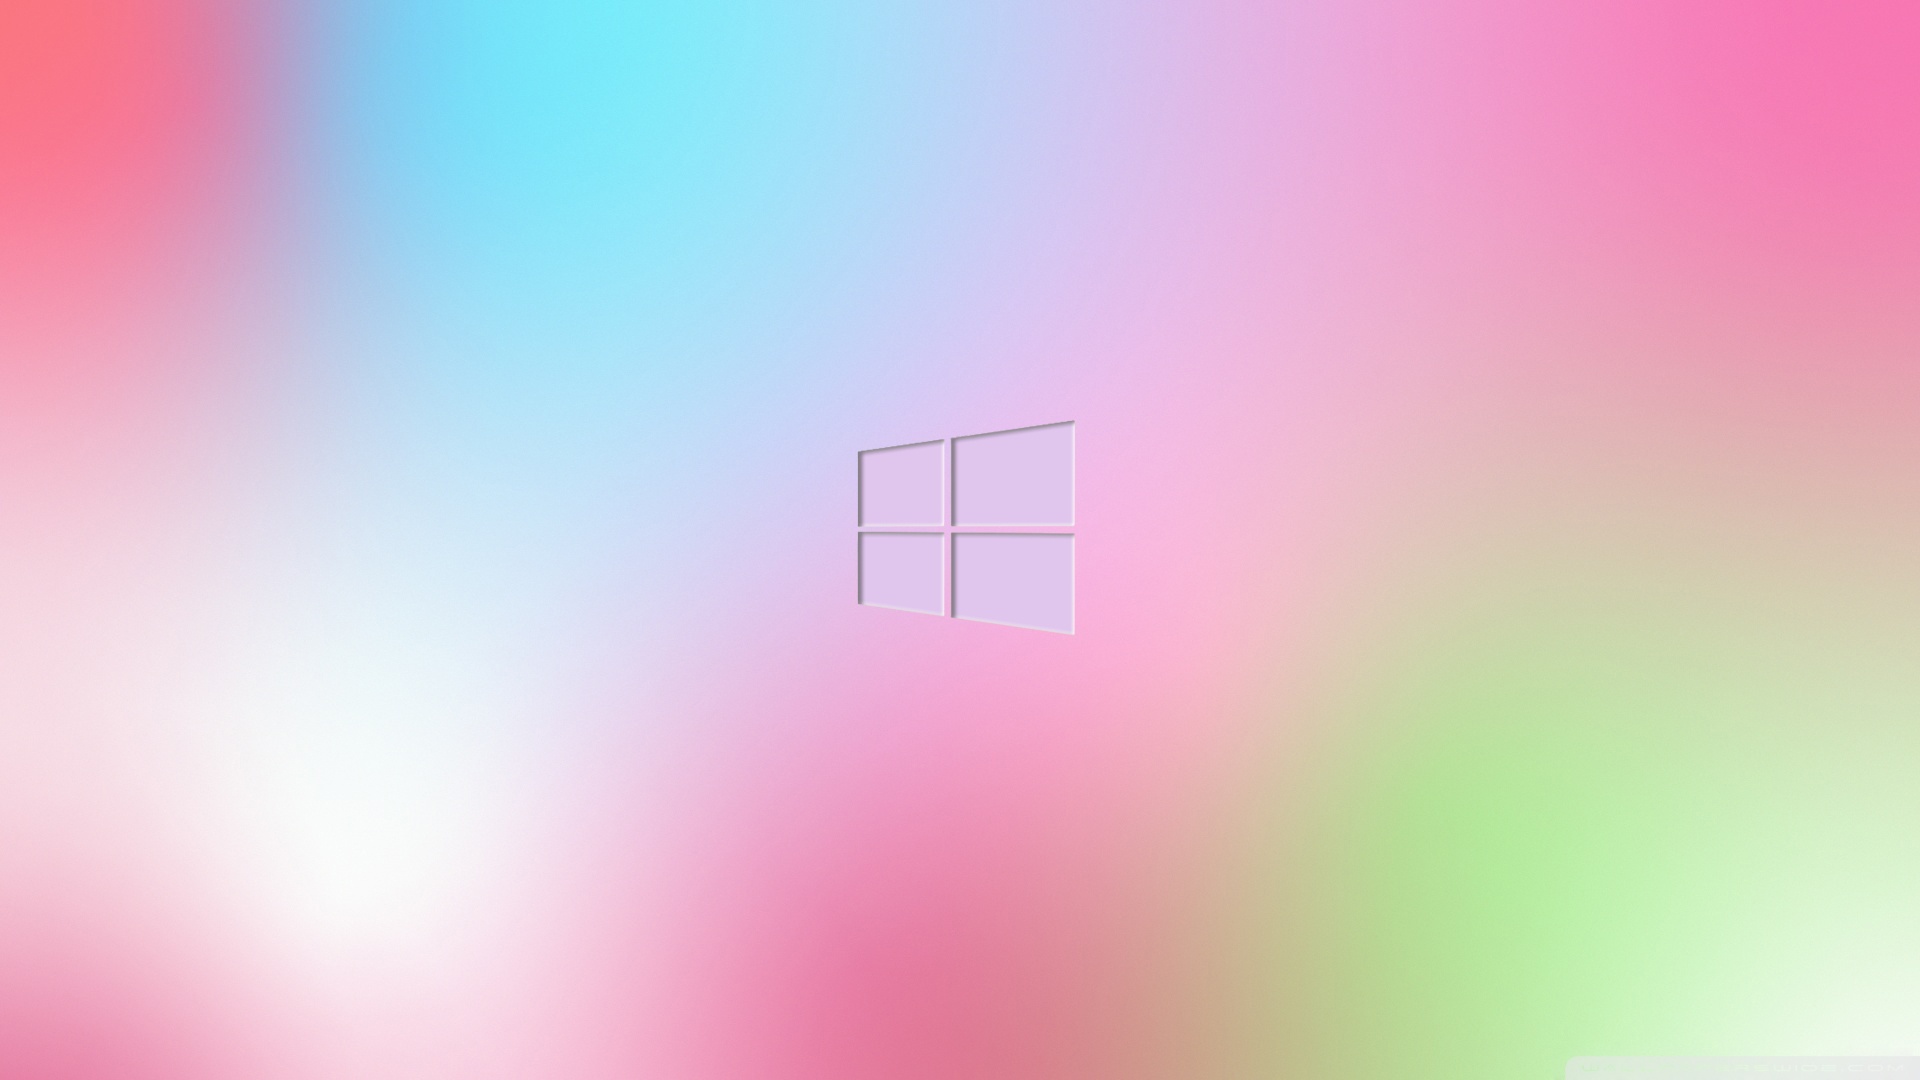 Pink Windows logo wallpaper  Computer wallpapers  24127